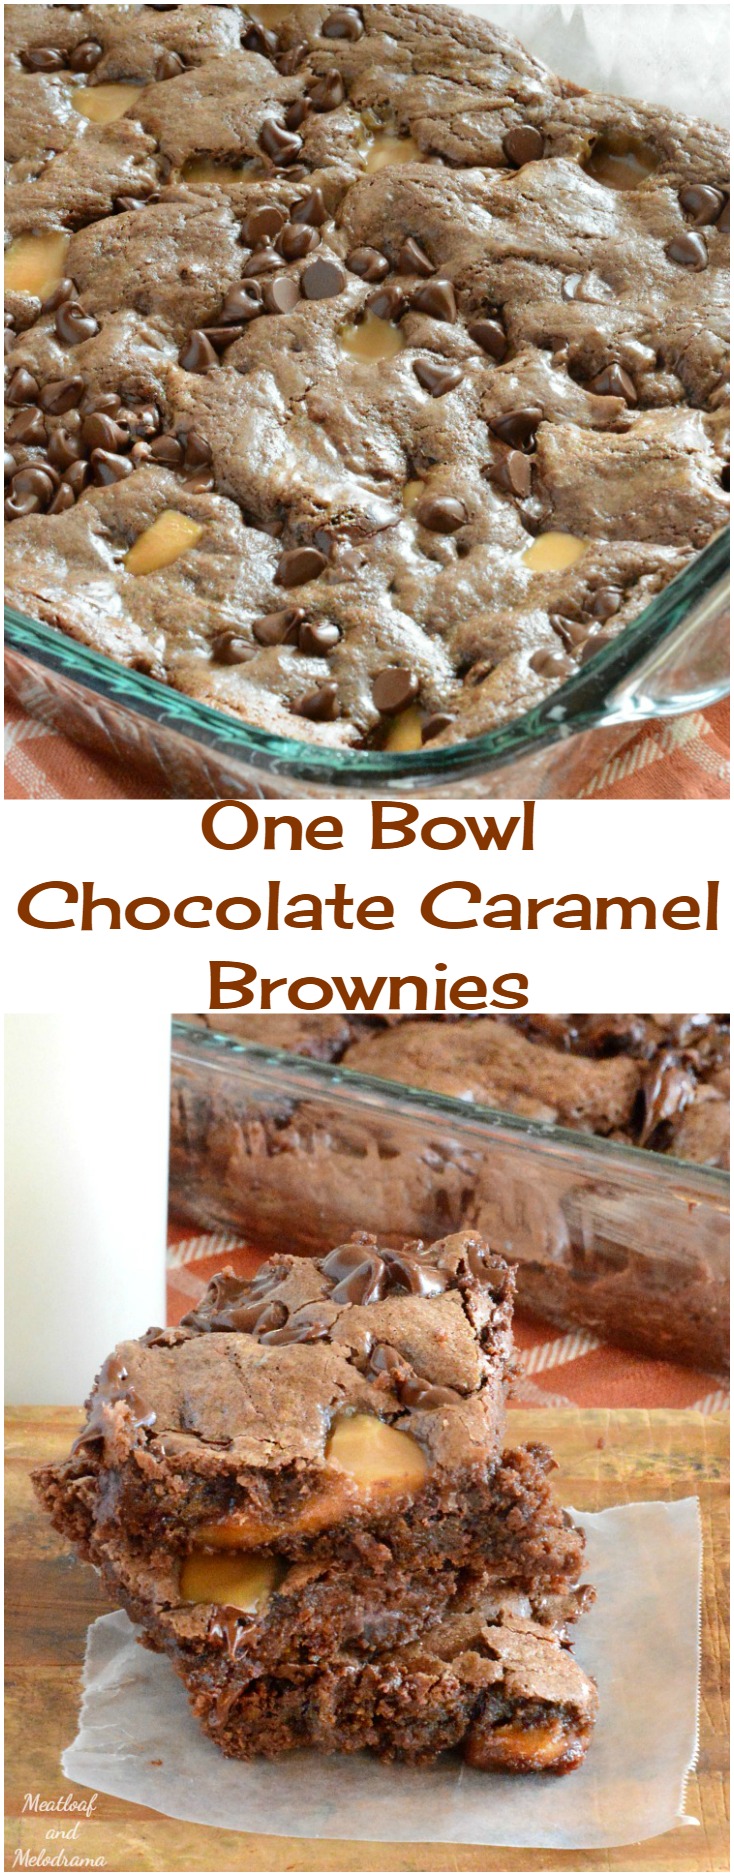 One Bowl Chocolate Caramel Brownies Recipe